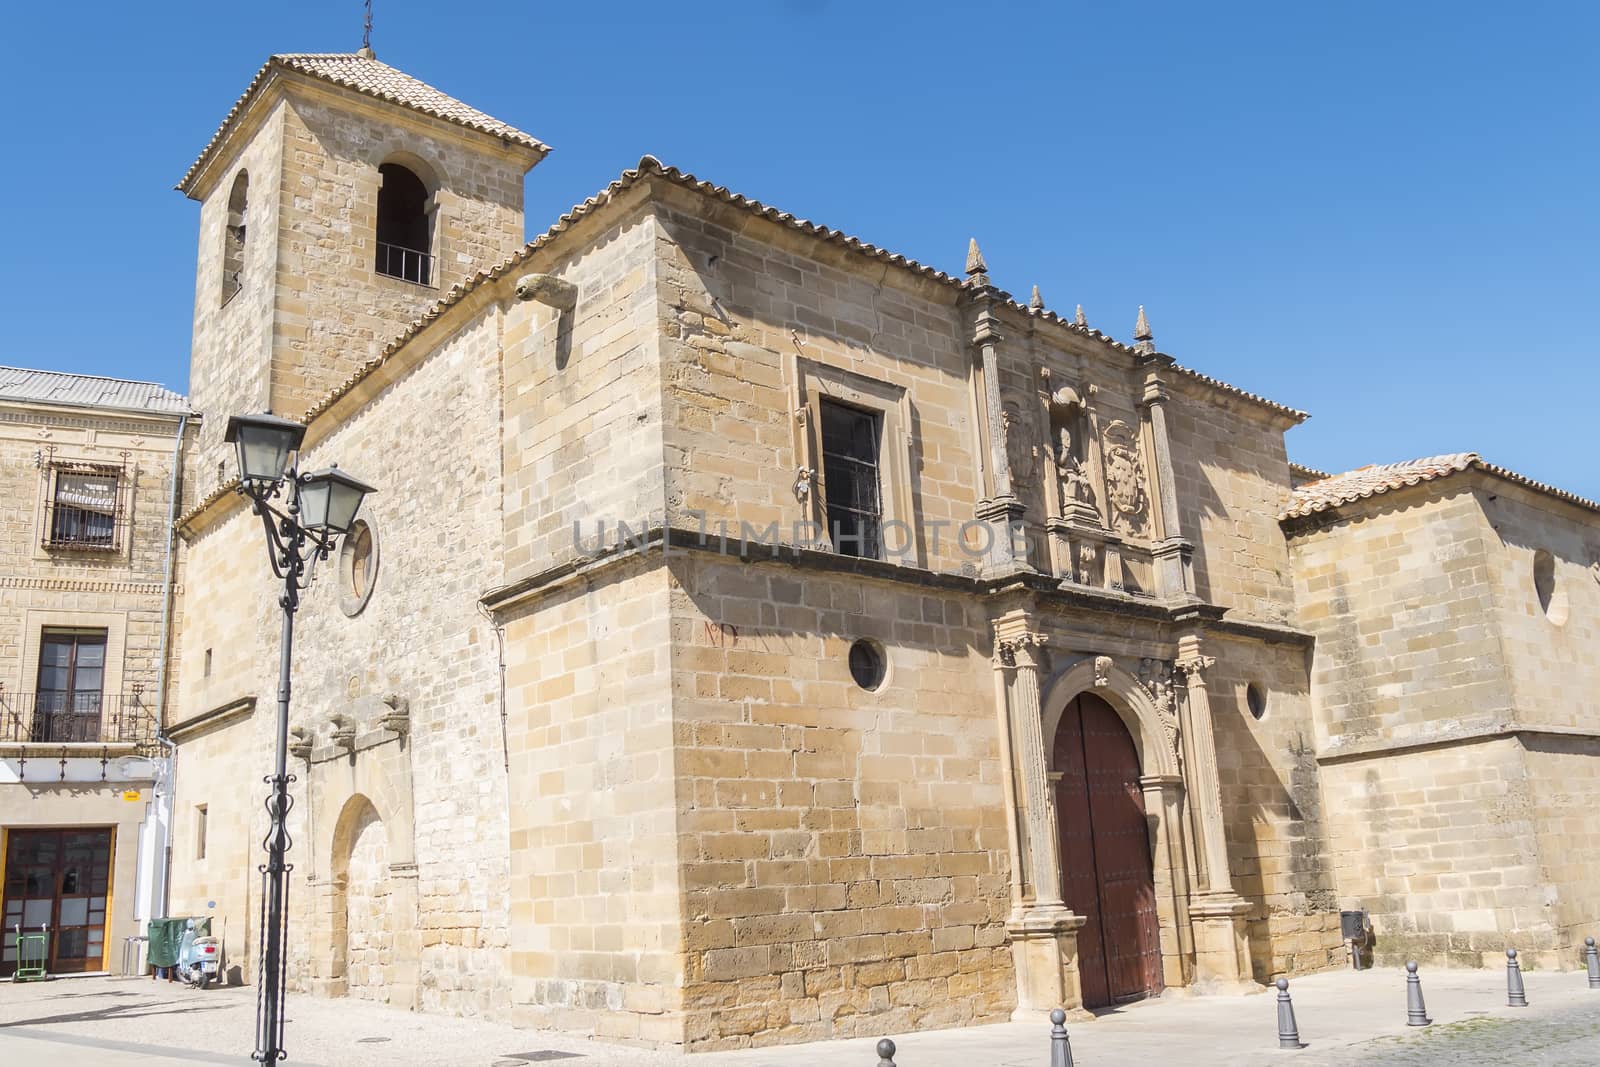 Old Church of St. Peter, Ubeda, Spain by max8xam